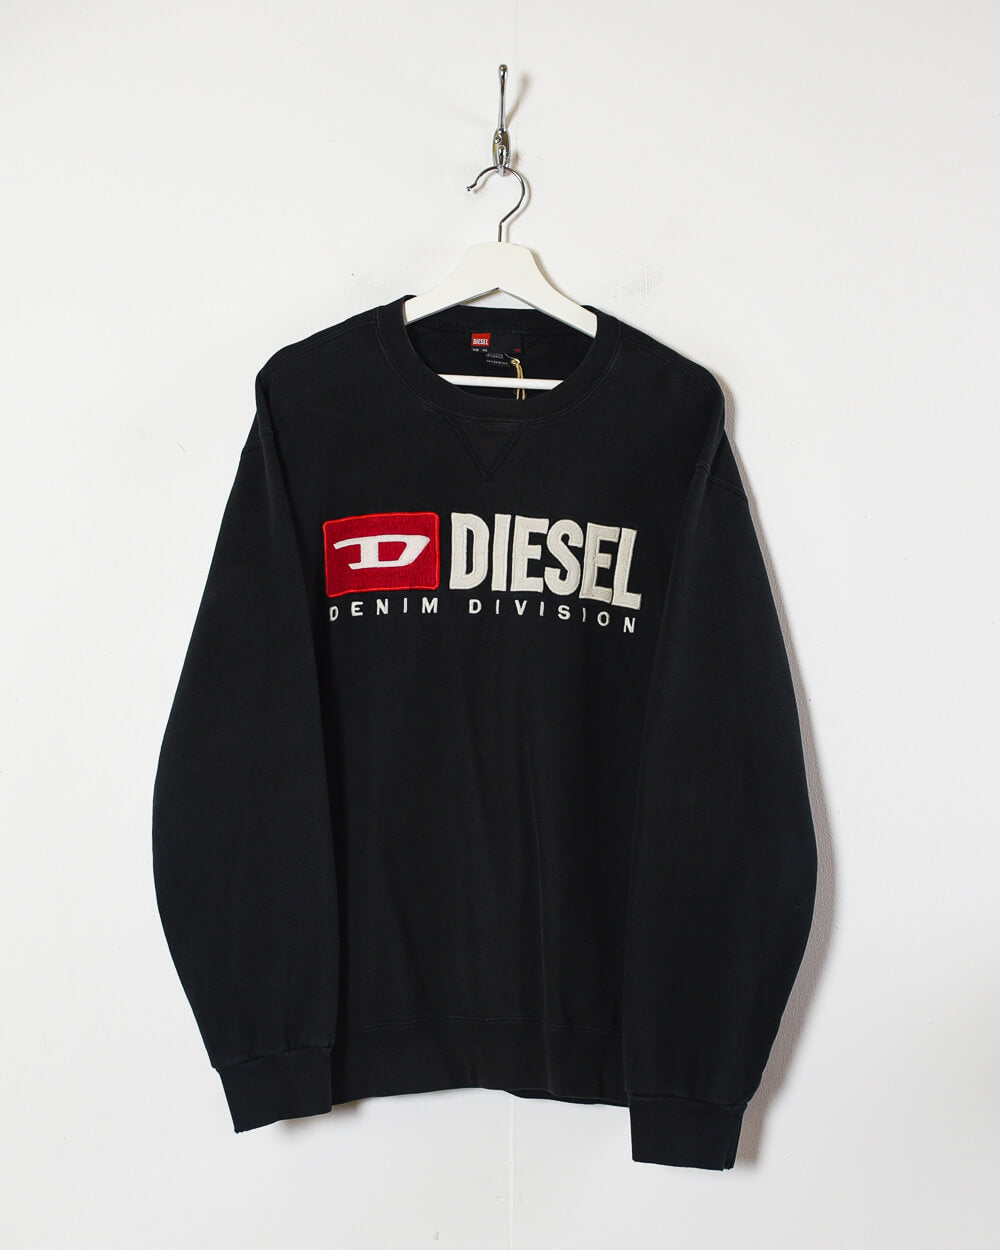 Black Diesel Denim Division Sweatshirt - Large